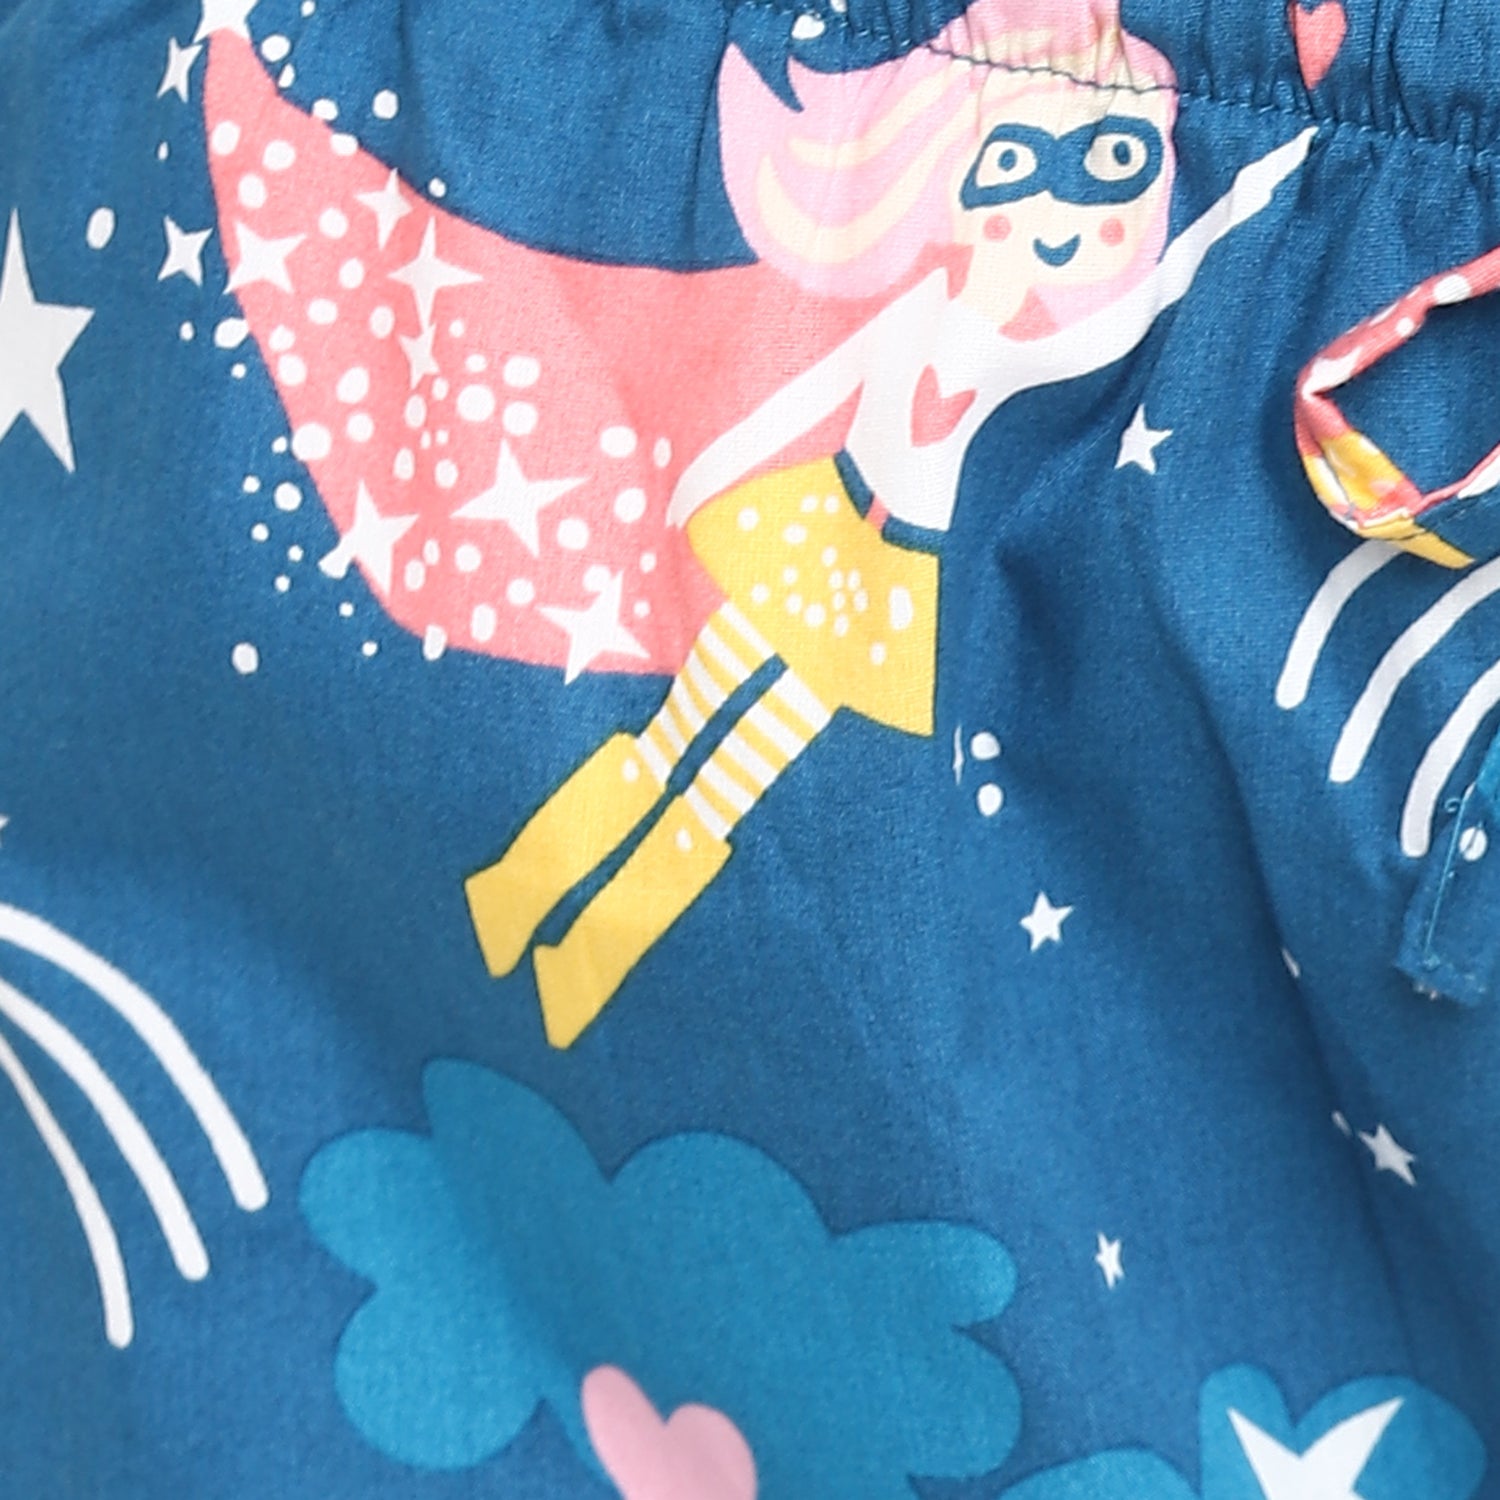 Wonder Girl Print Women's Pyjama Bottoms - Shopbloom